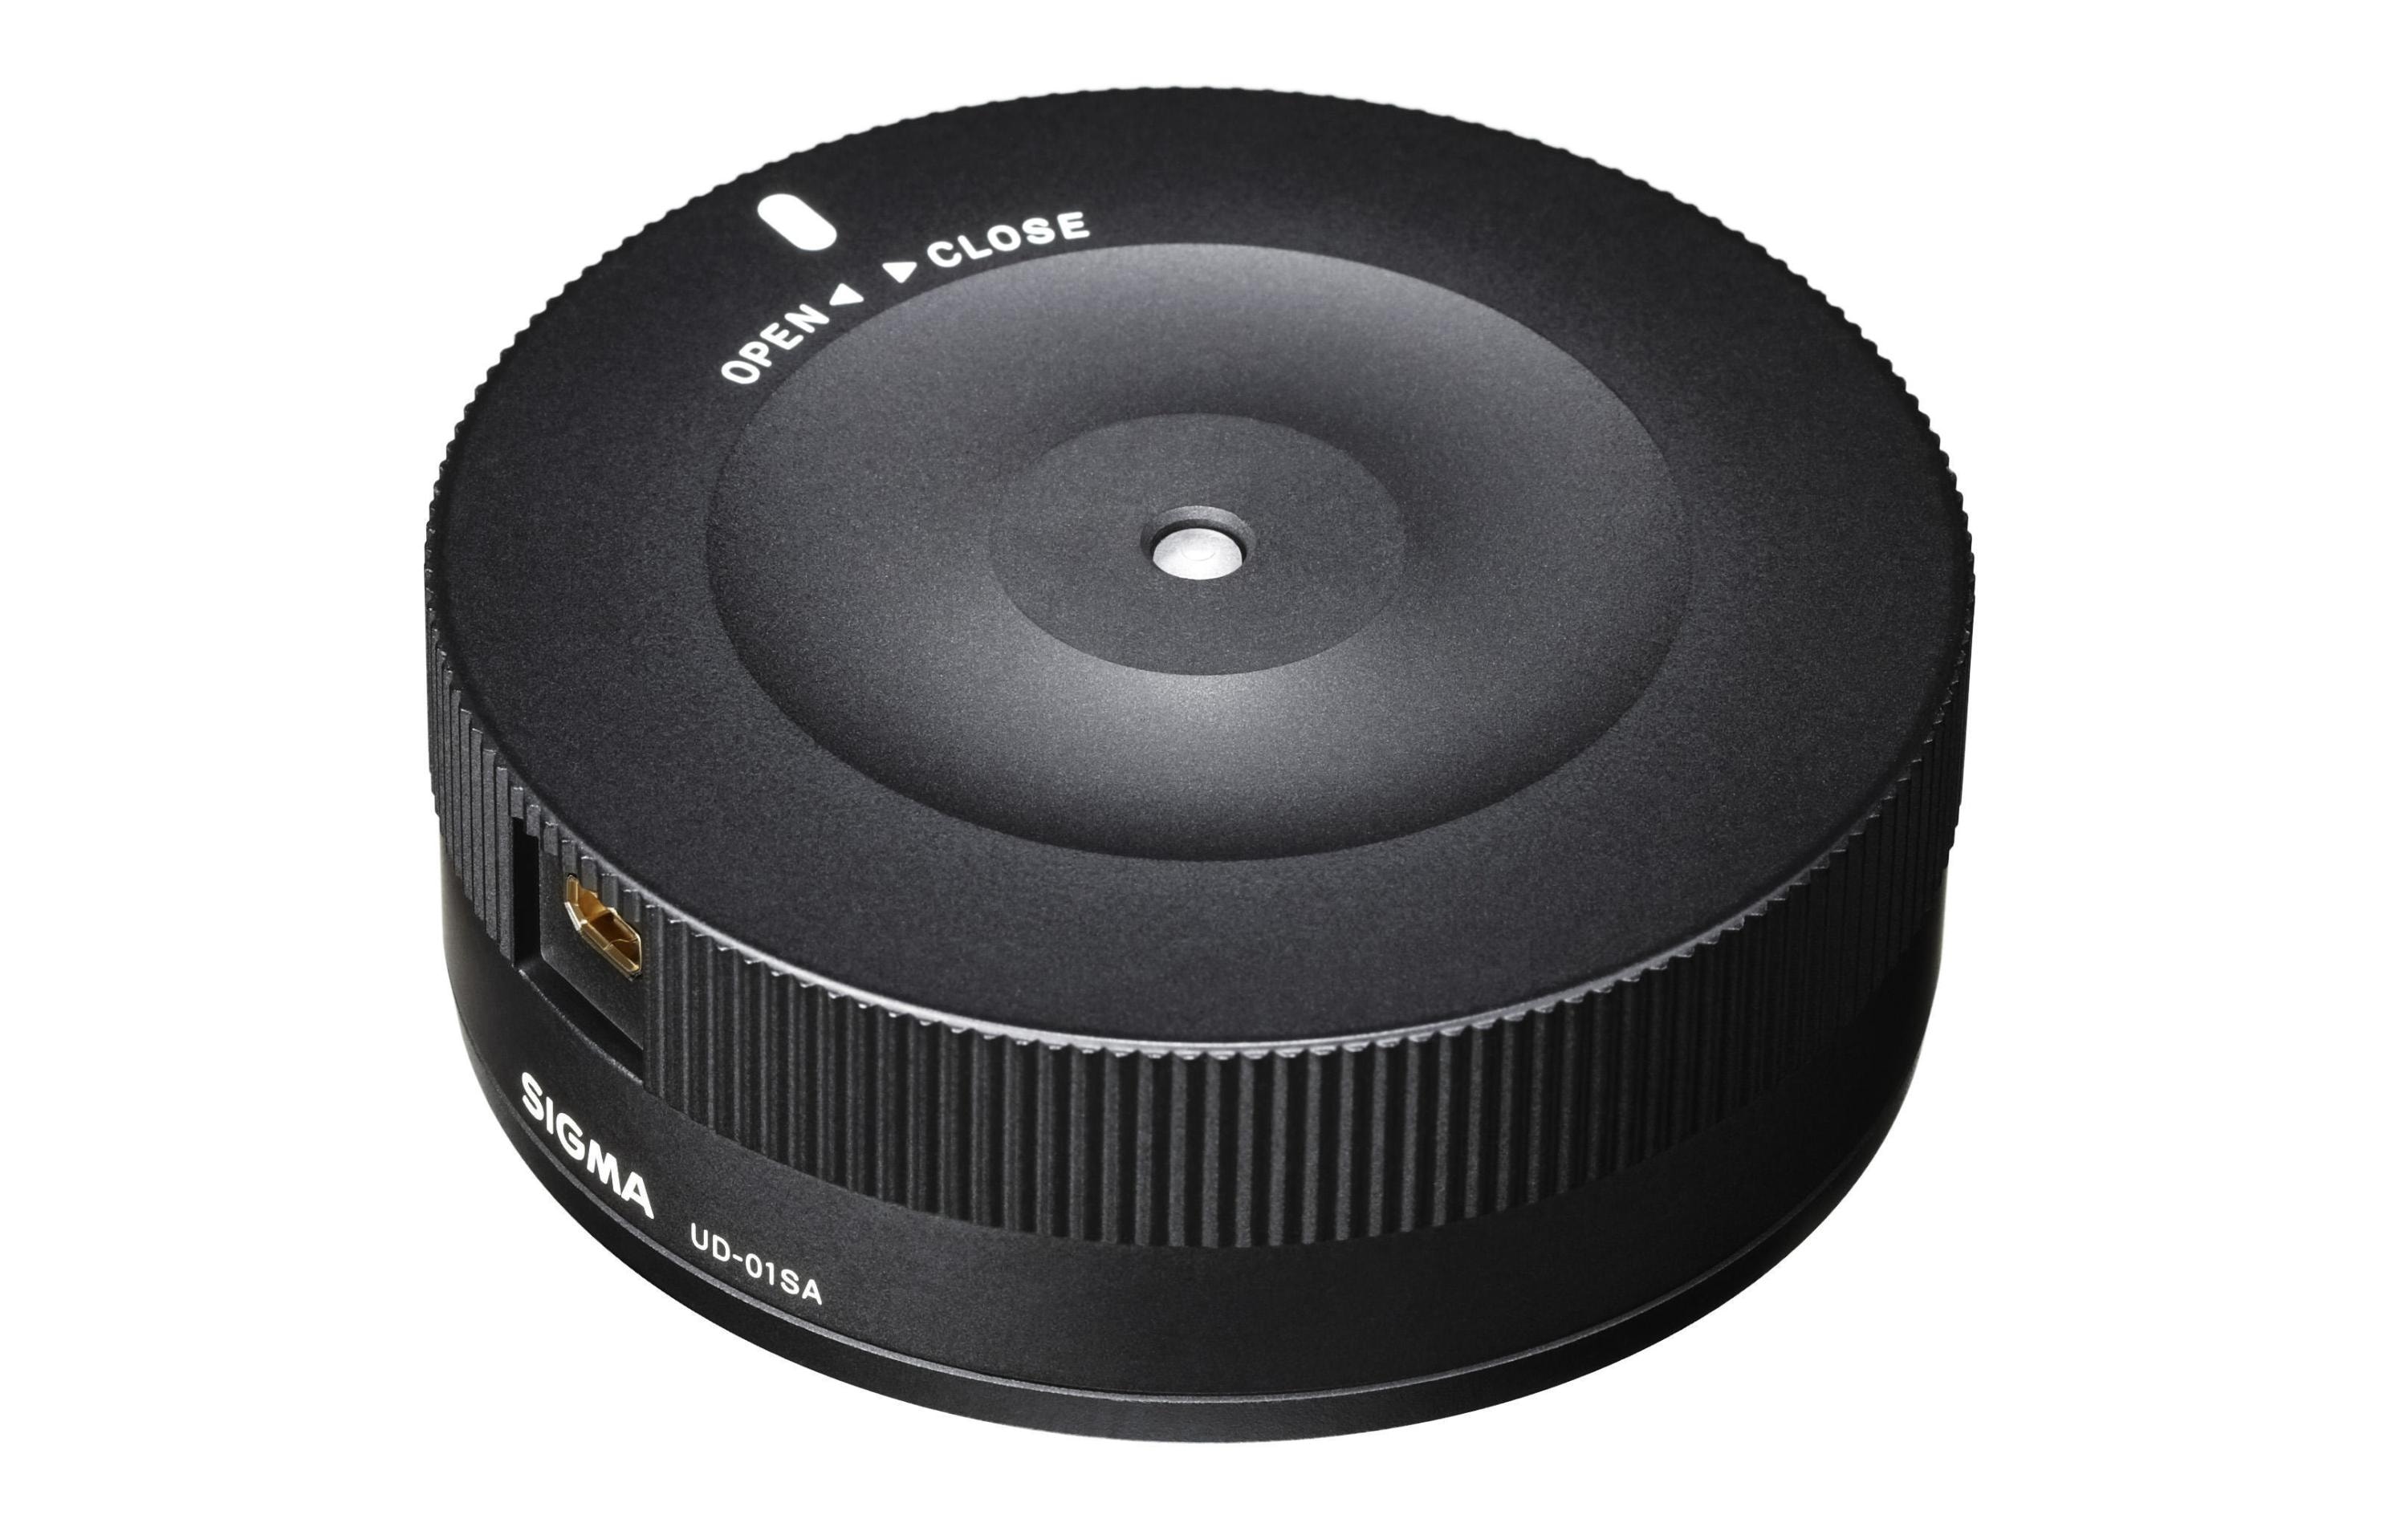 Sigma USB Dock UD-01 Nikon F-Mount